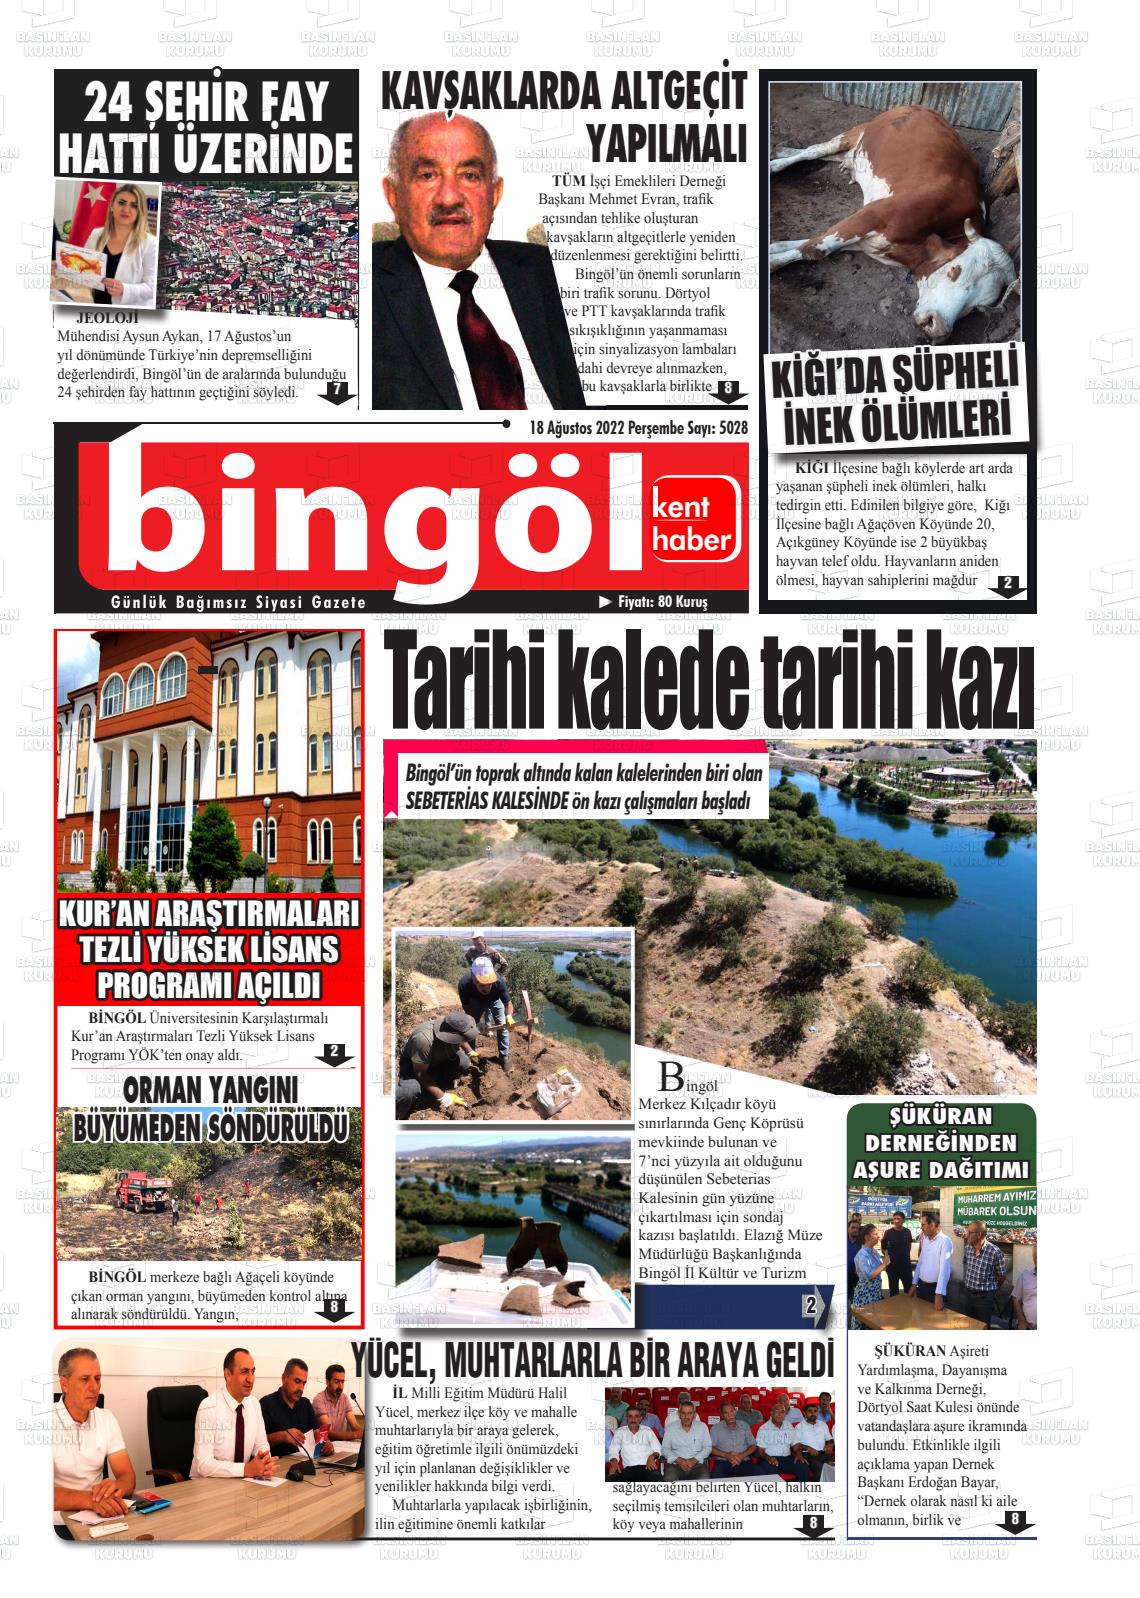 18 Ağustos 2022 Bingöl Kent Haber Gazete Manşeti